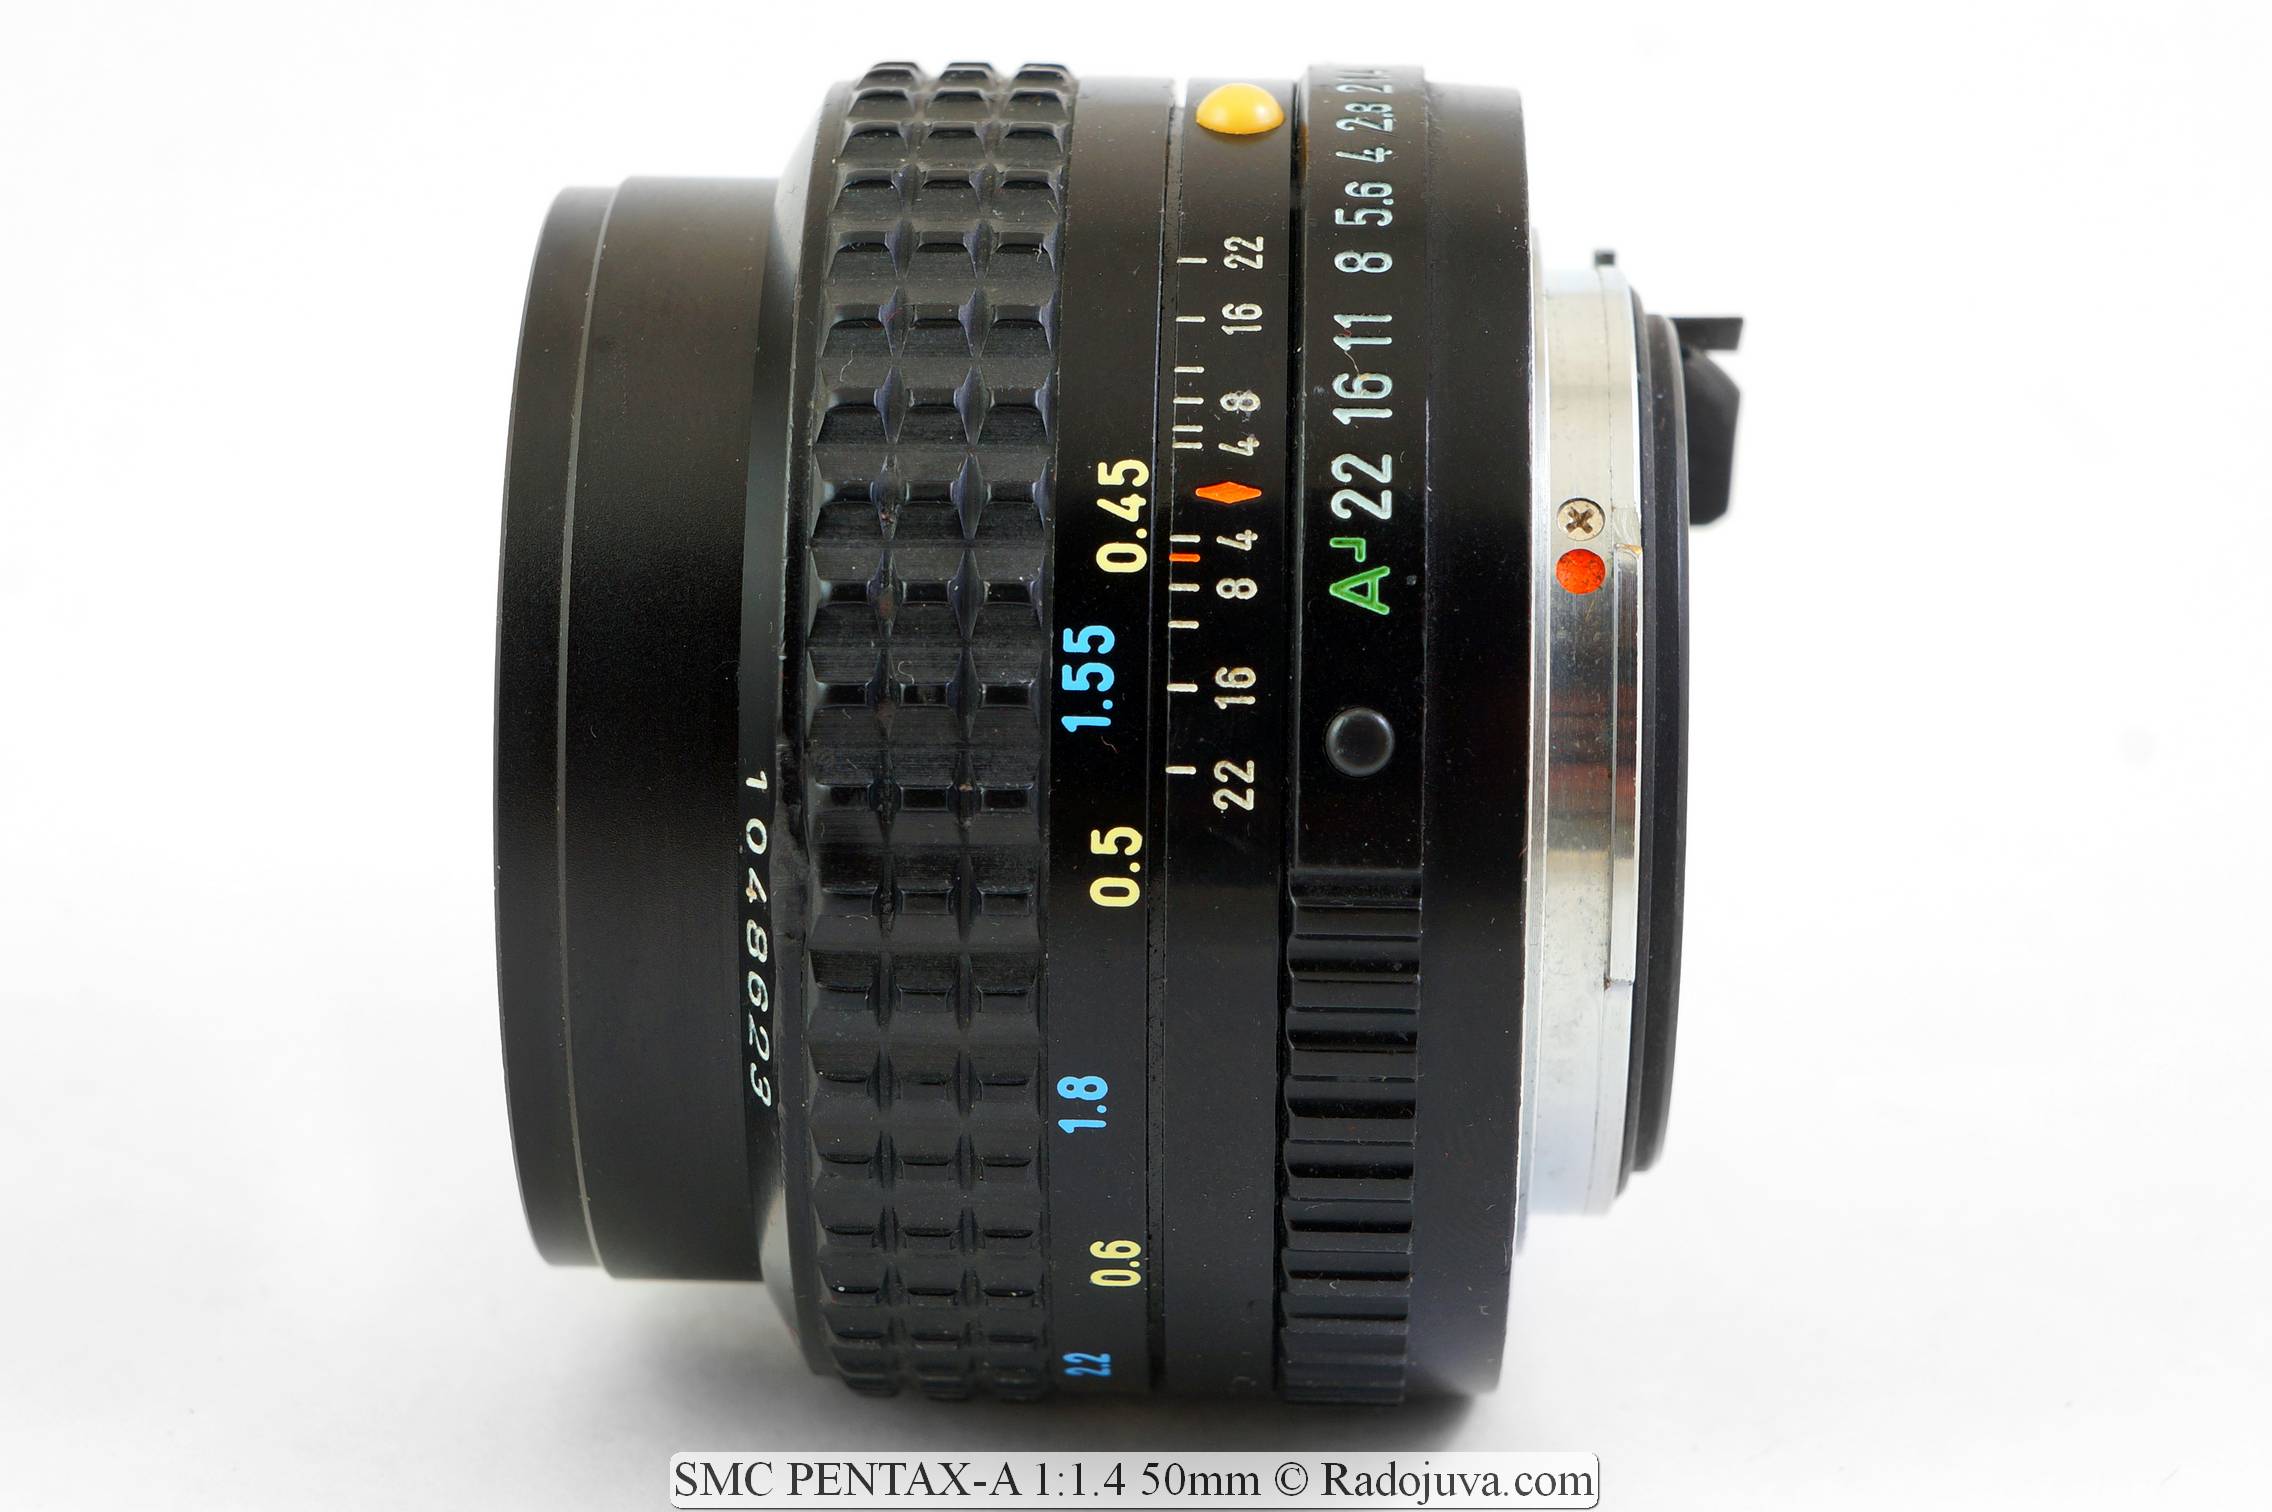 SMC PENTAX-A 1:1.4 50mm